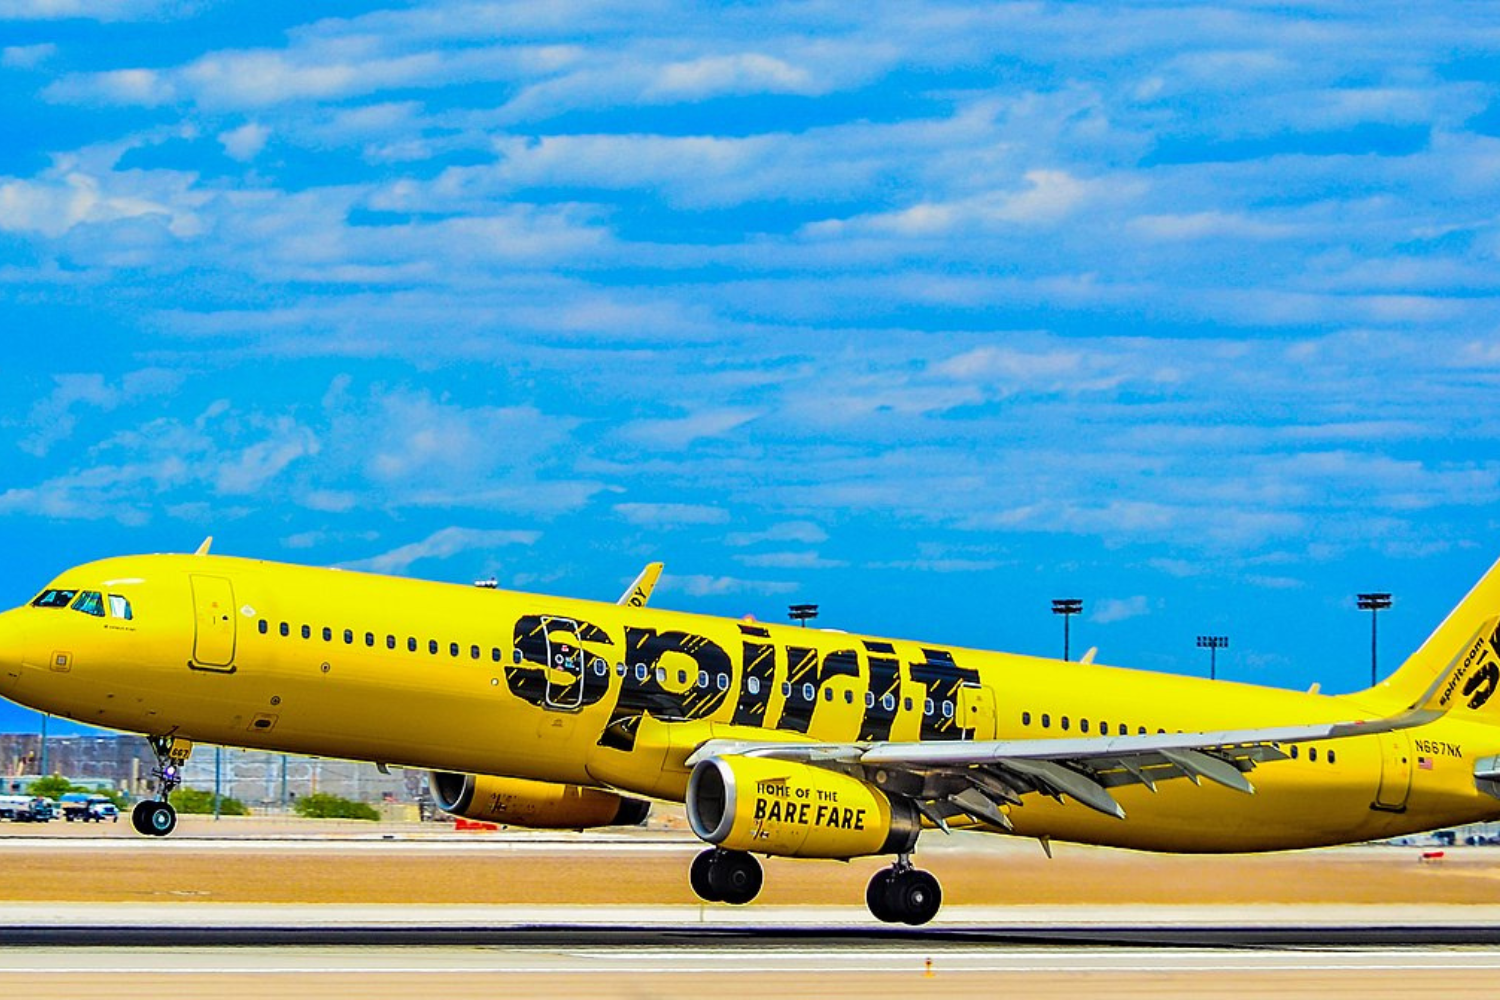 yellow spirit flight at the airport